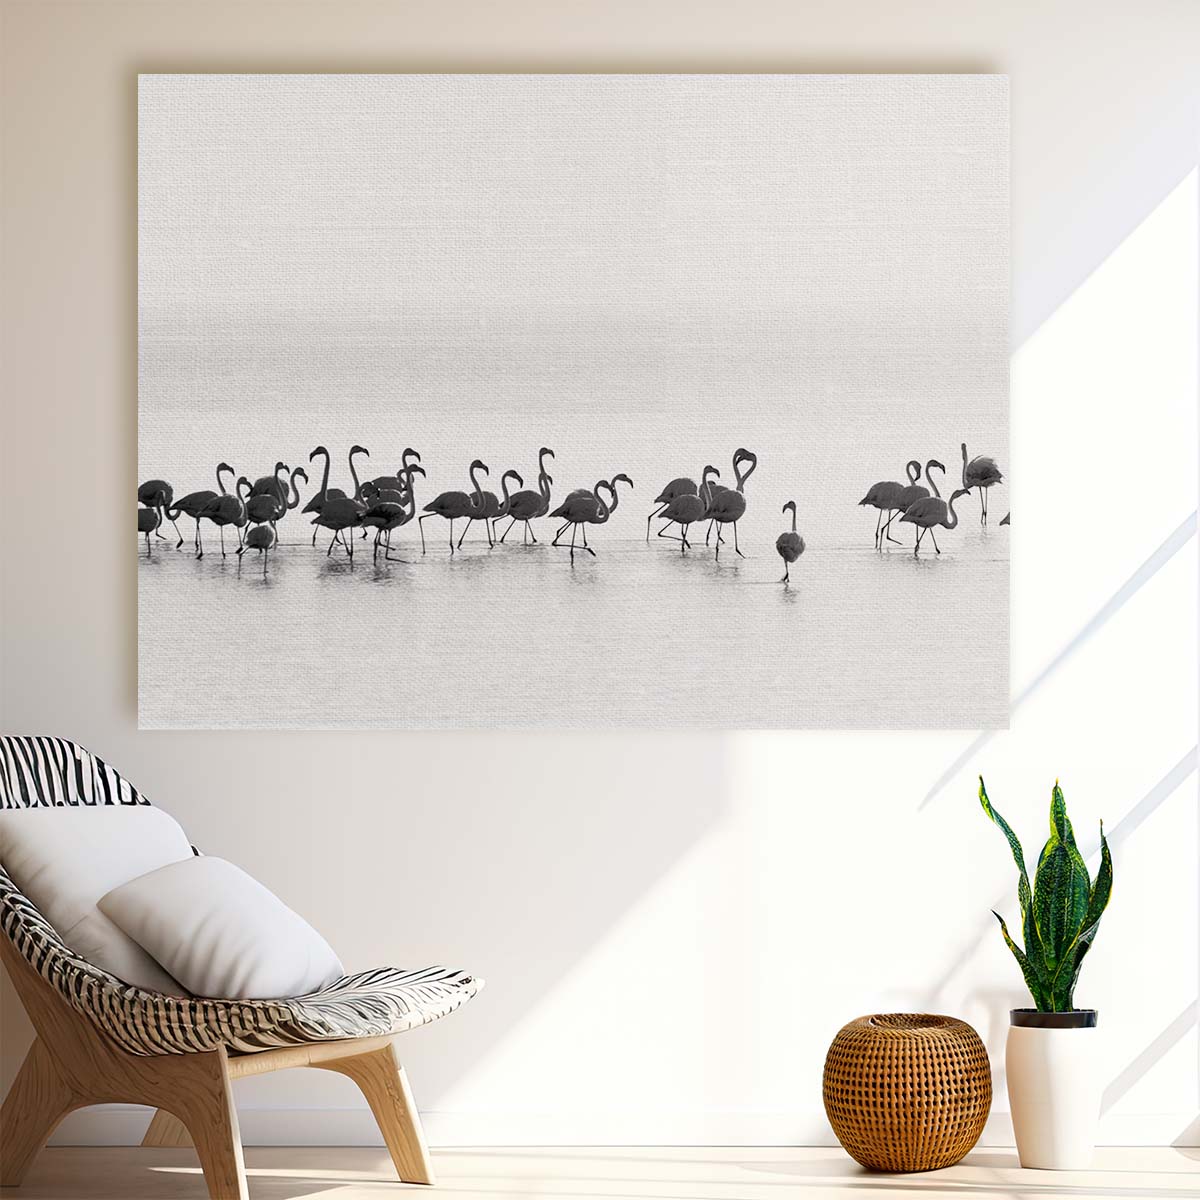 Monochrome Flamingo Flock Coastal Landscape Wall Art by Luxuriance Designs. Made in USA.